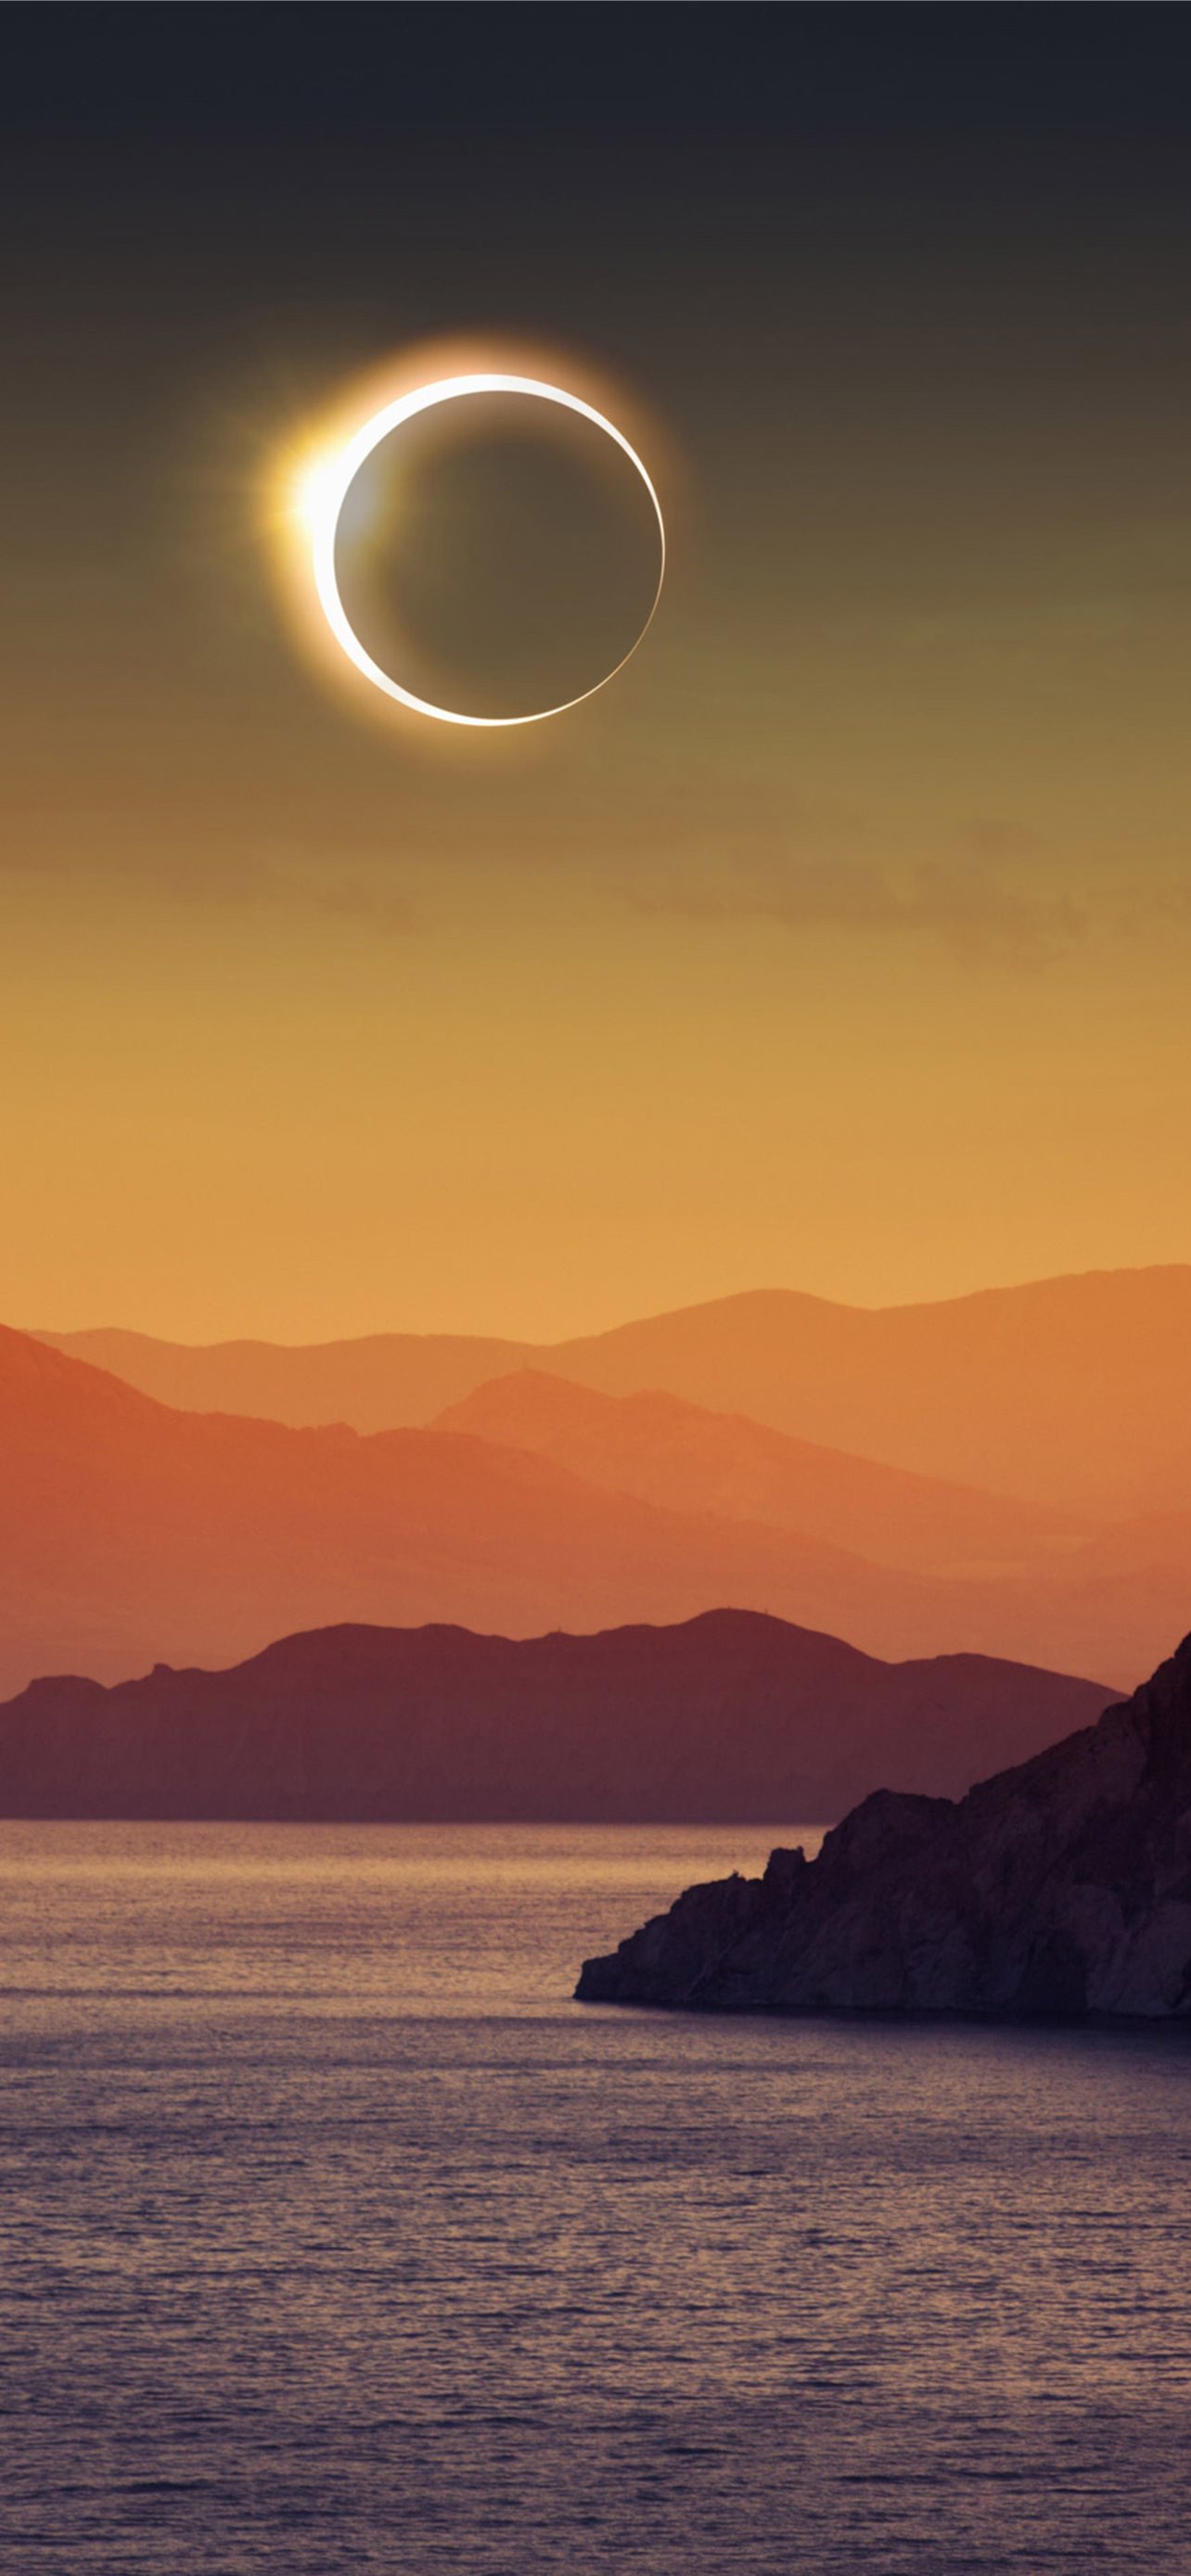 Solar Eclipse Images - Free Download on Freepik